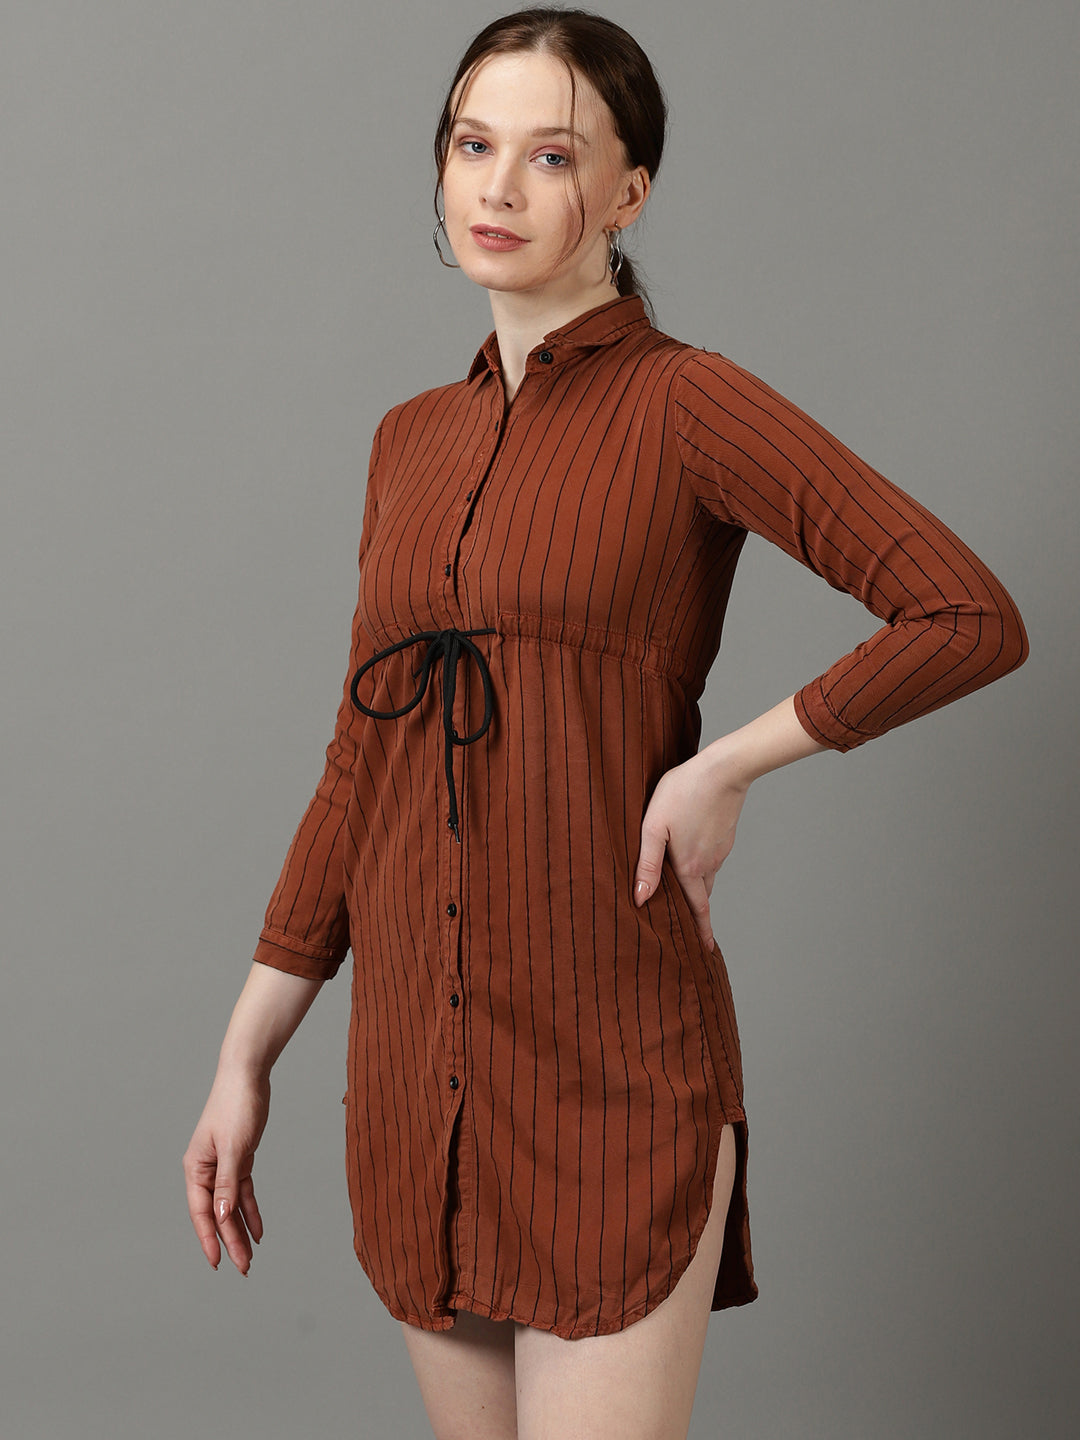 Women's Brown Striped Shirt Style Longline Top